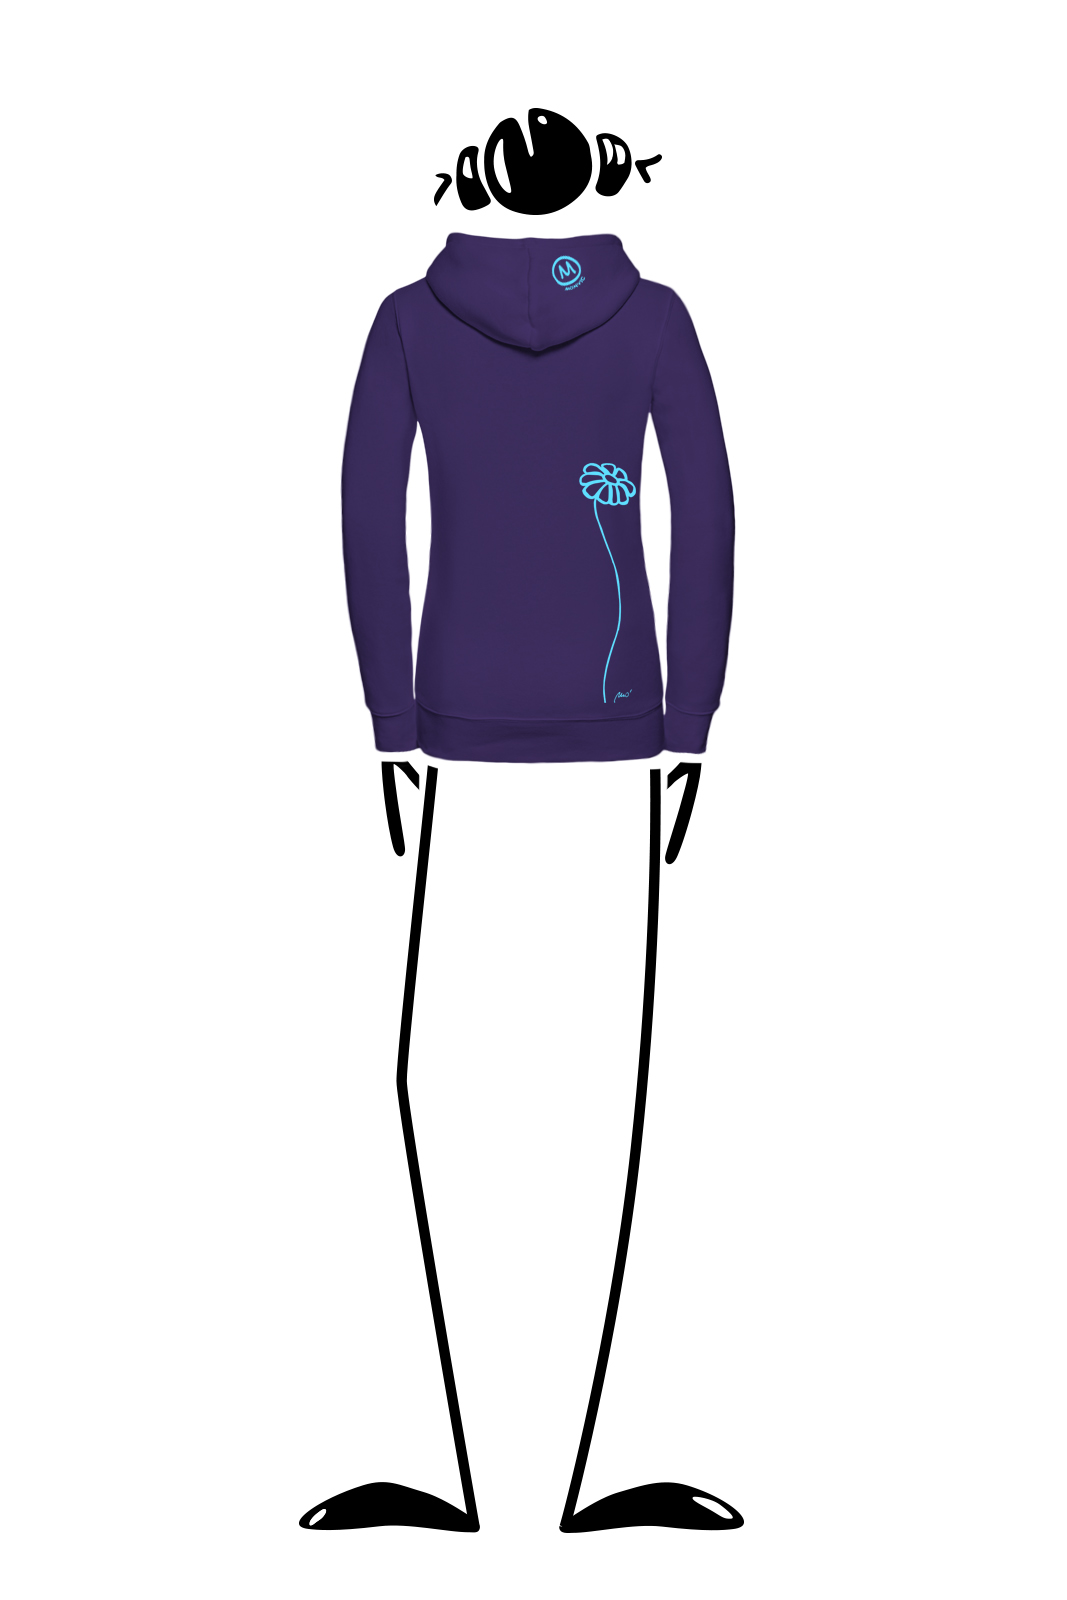 hoodie woman purple FEDRA Monvic